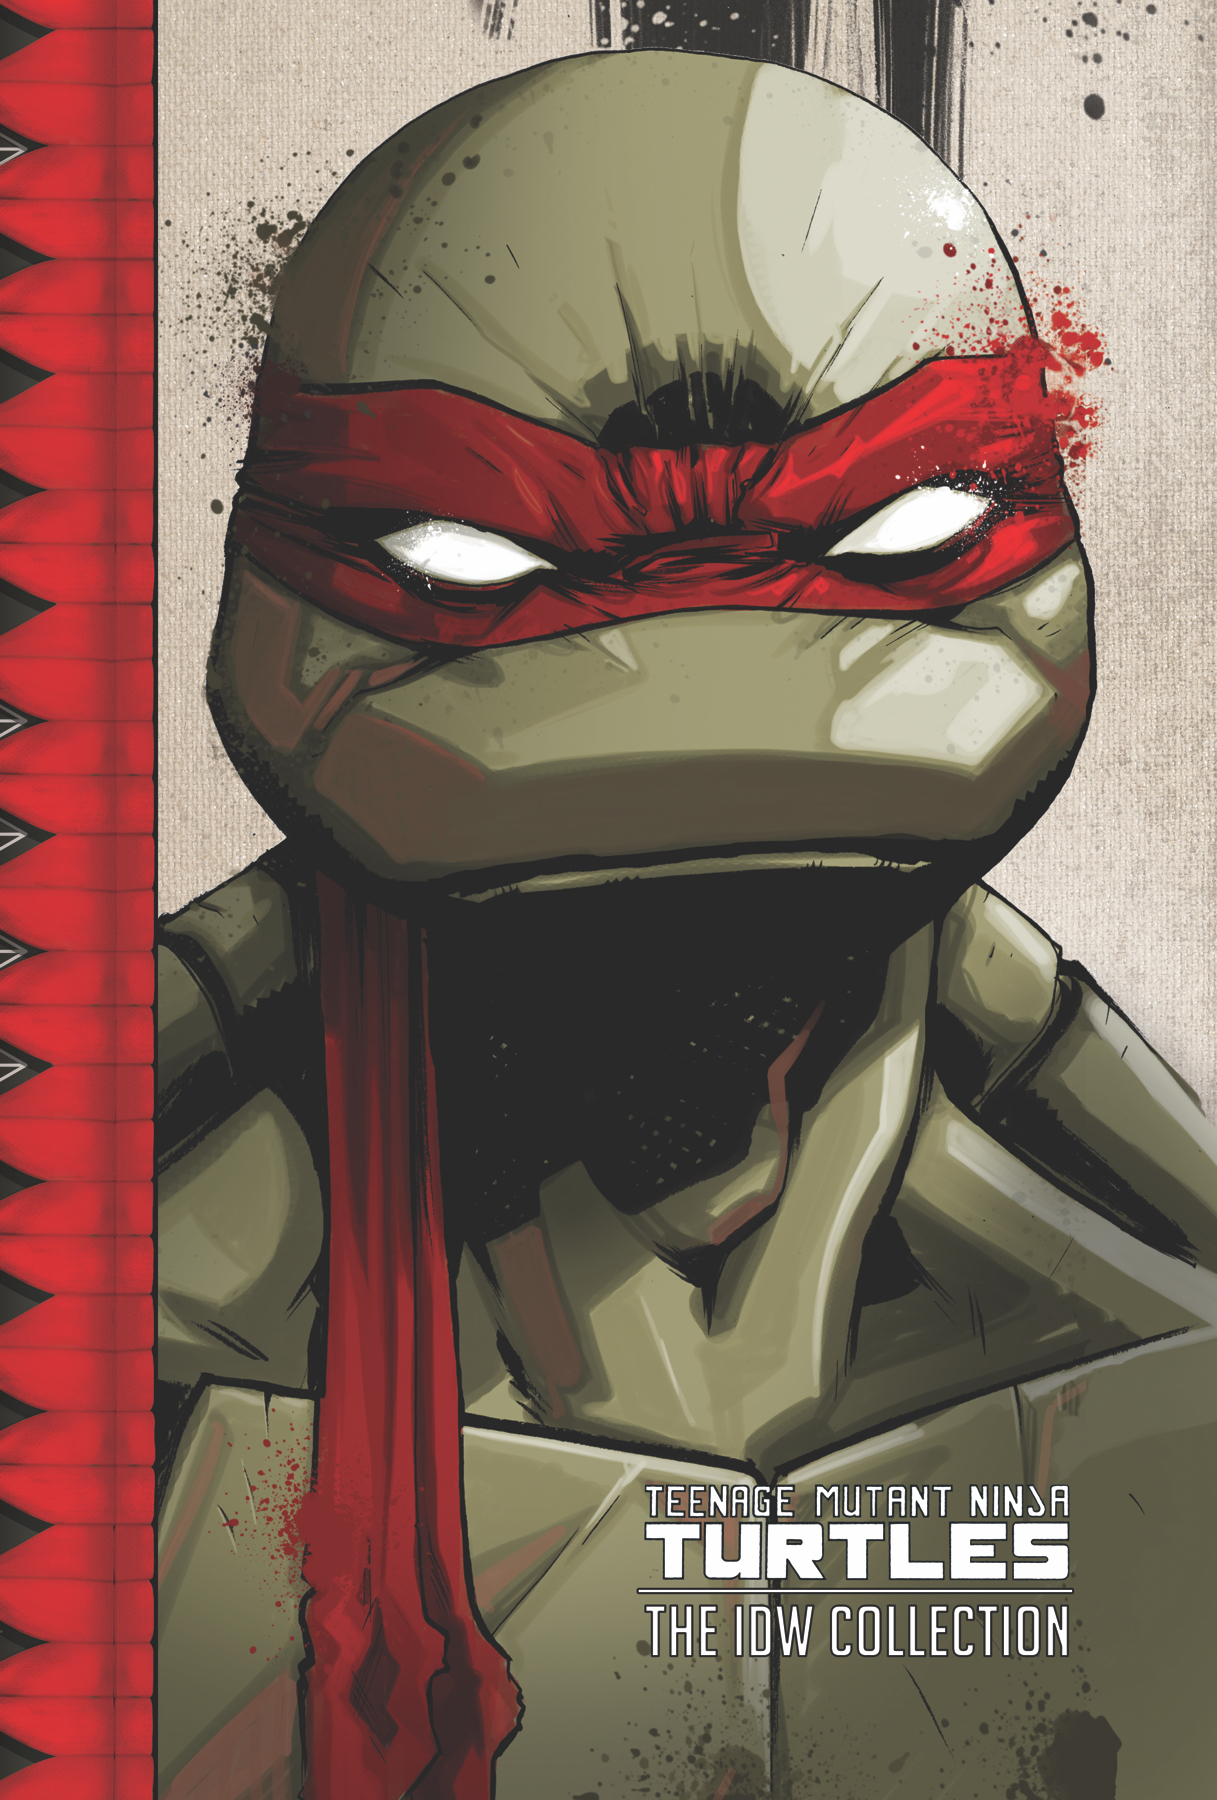 Teenage Mutant Ninja Turtles Ongoing (IDW) Collected Graphic Novel Volume 1